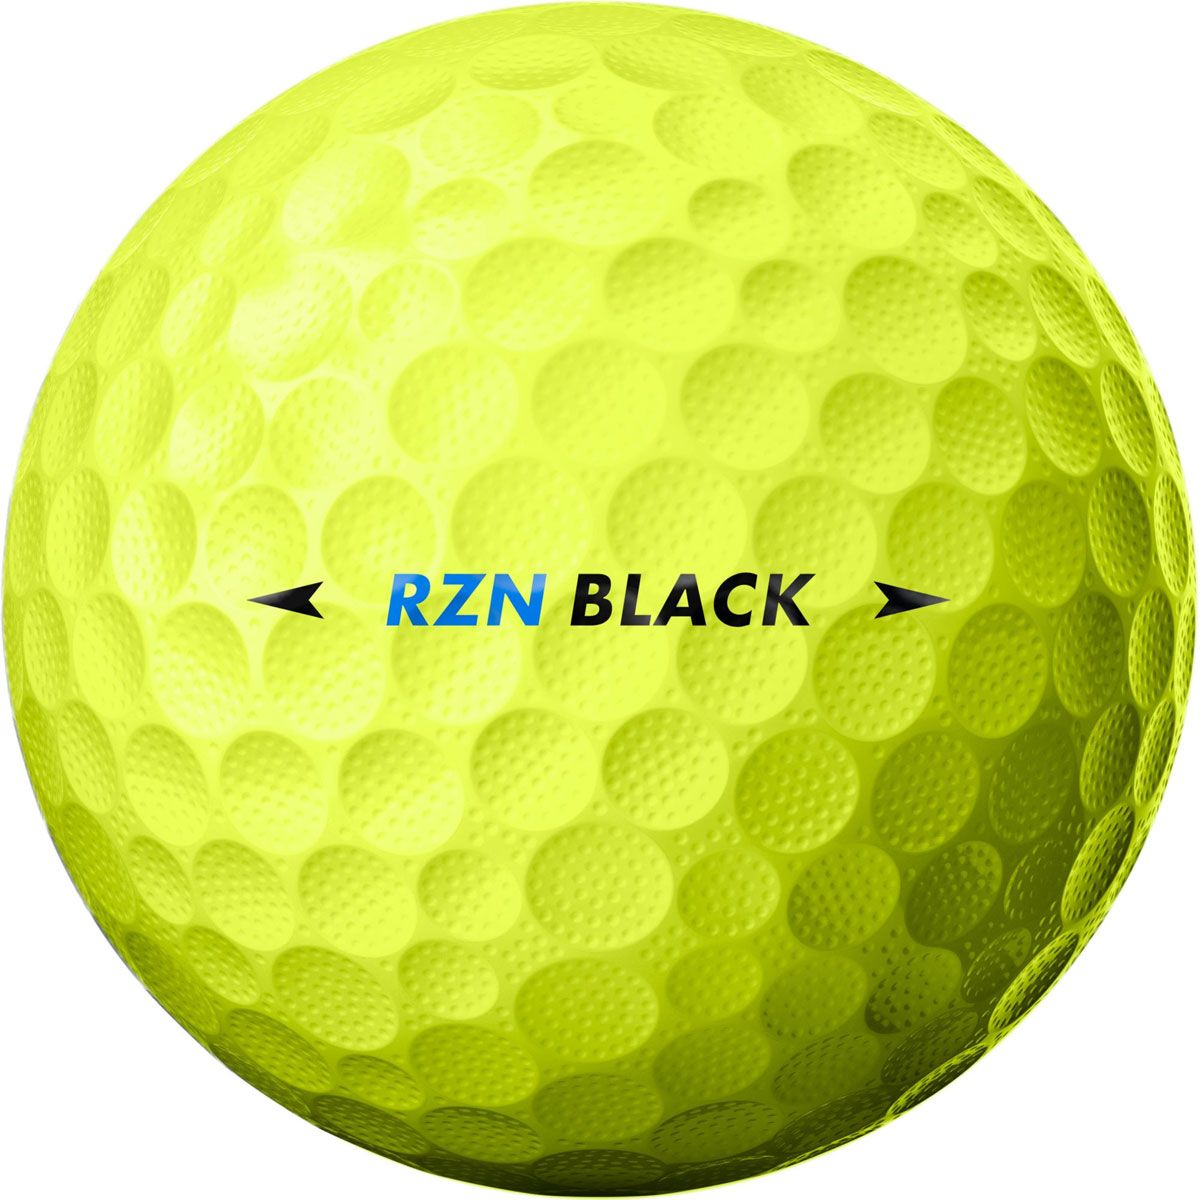 nike rzn black golf ball review 